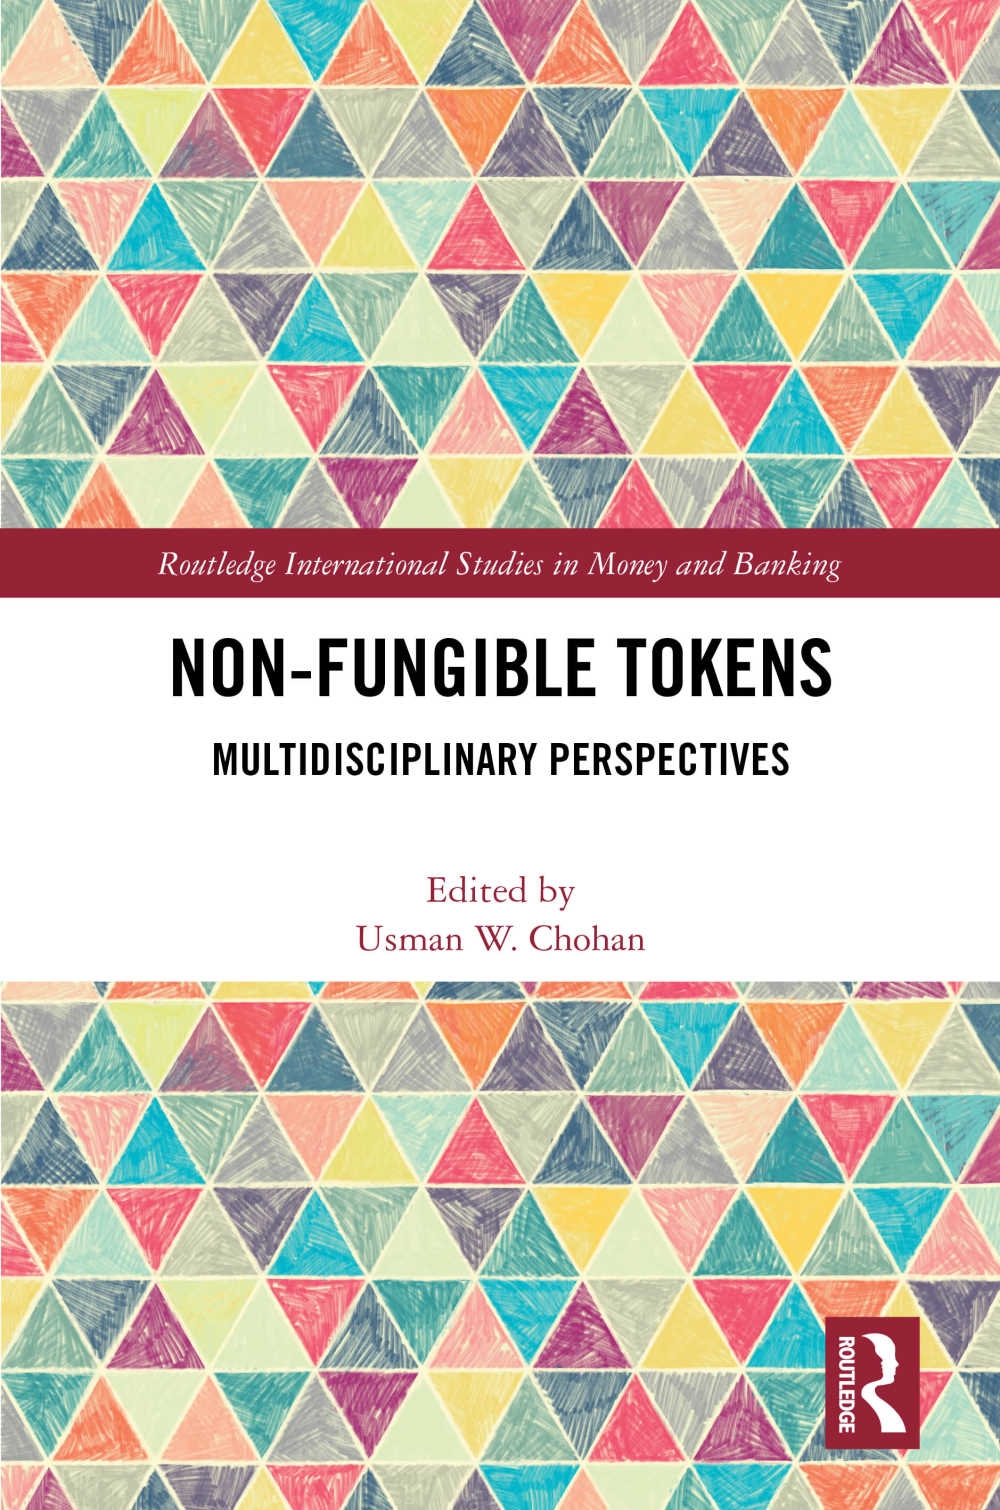 Non-Fungible Tokens: Multidisciplinary Perspectives